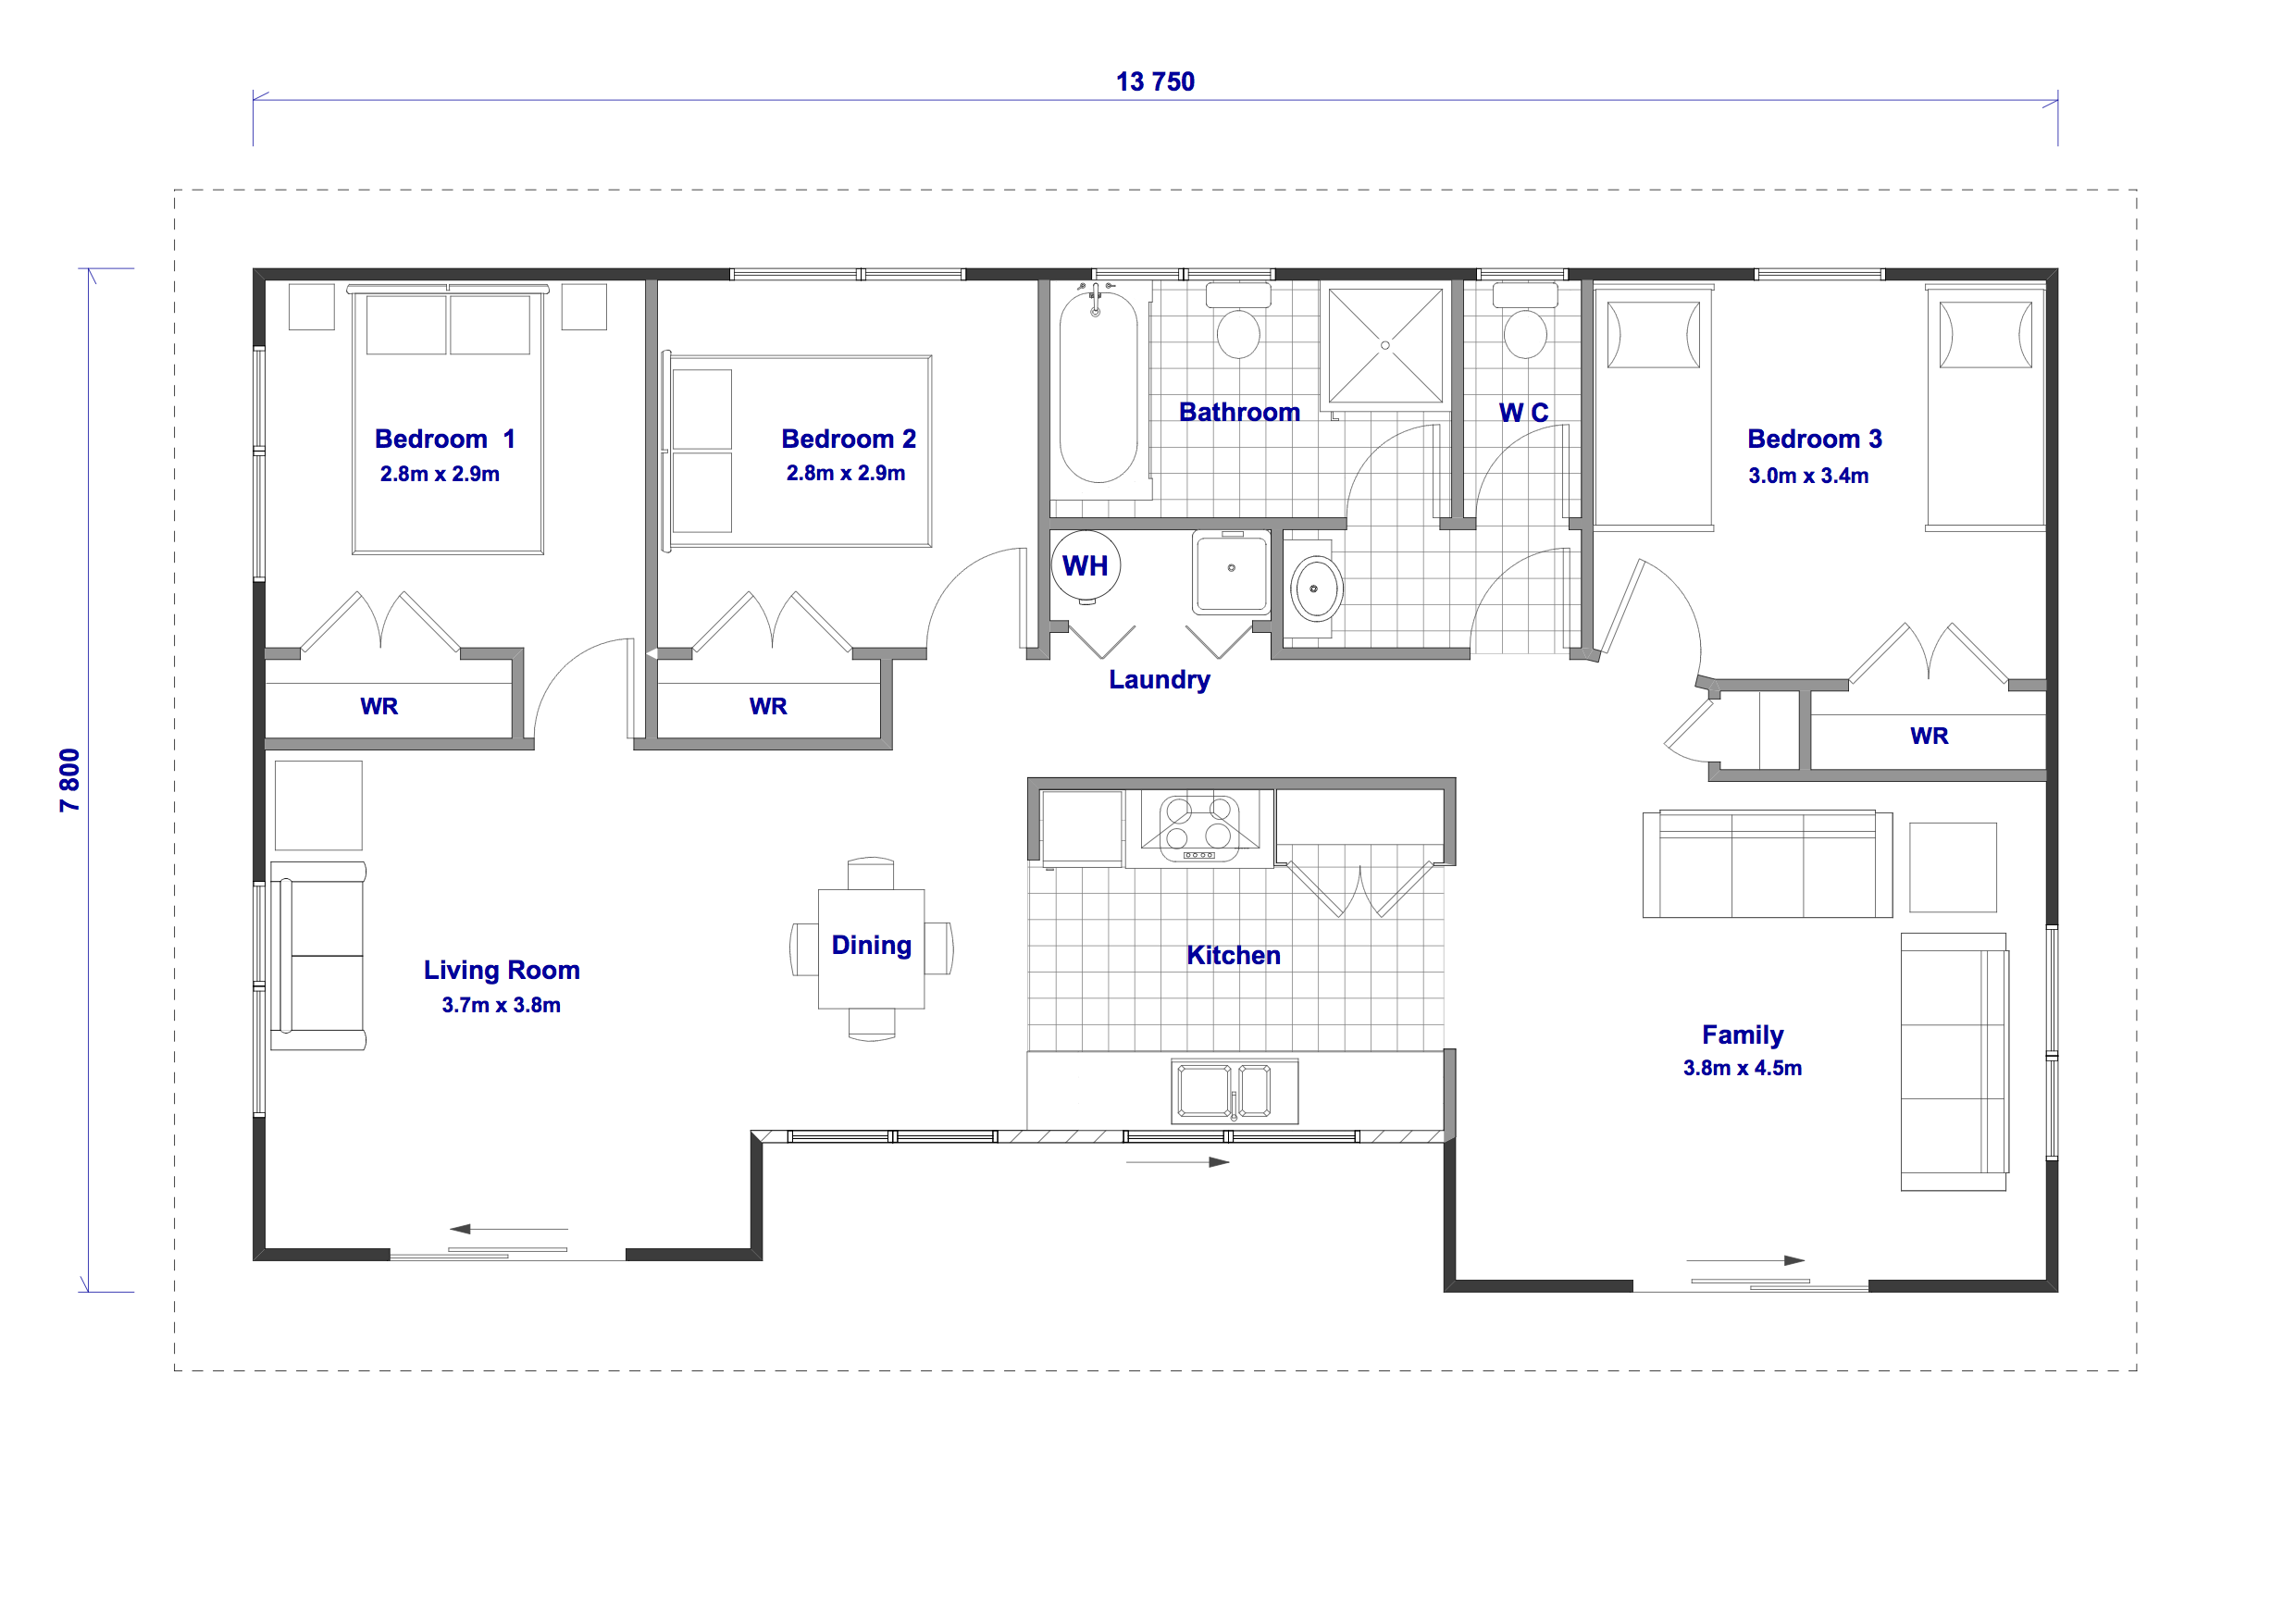 NZ99 hauraki 3 bedroom house floor plan